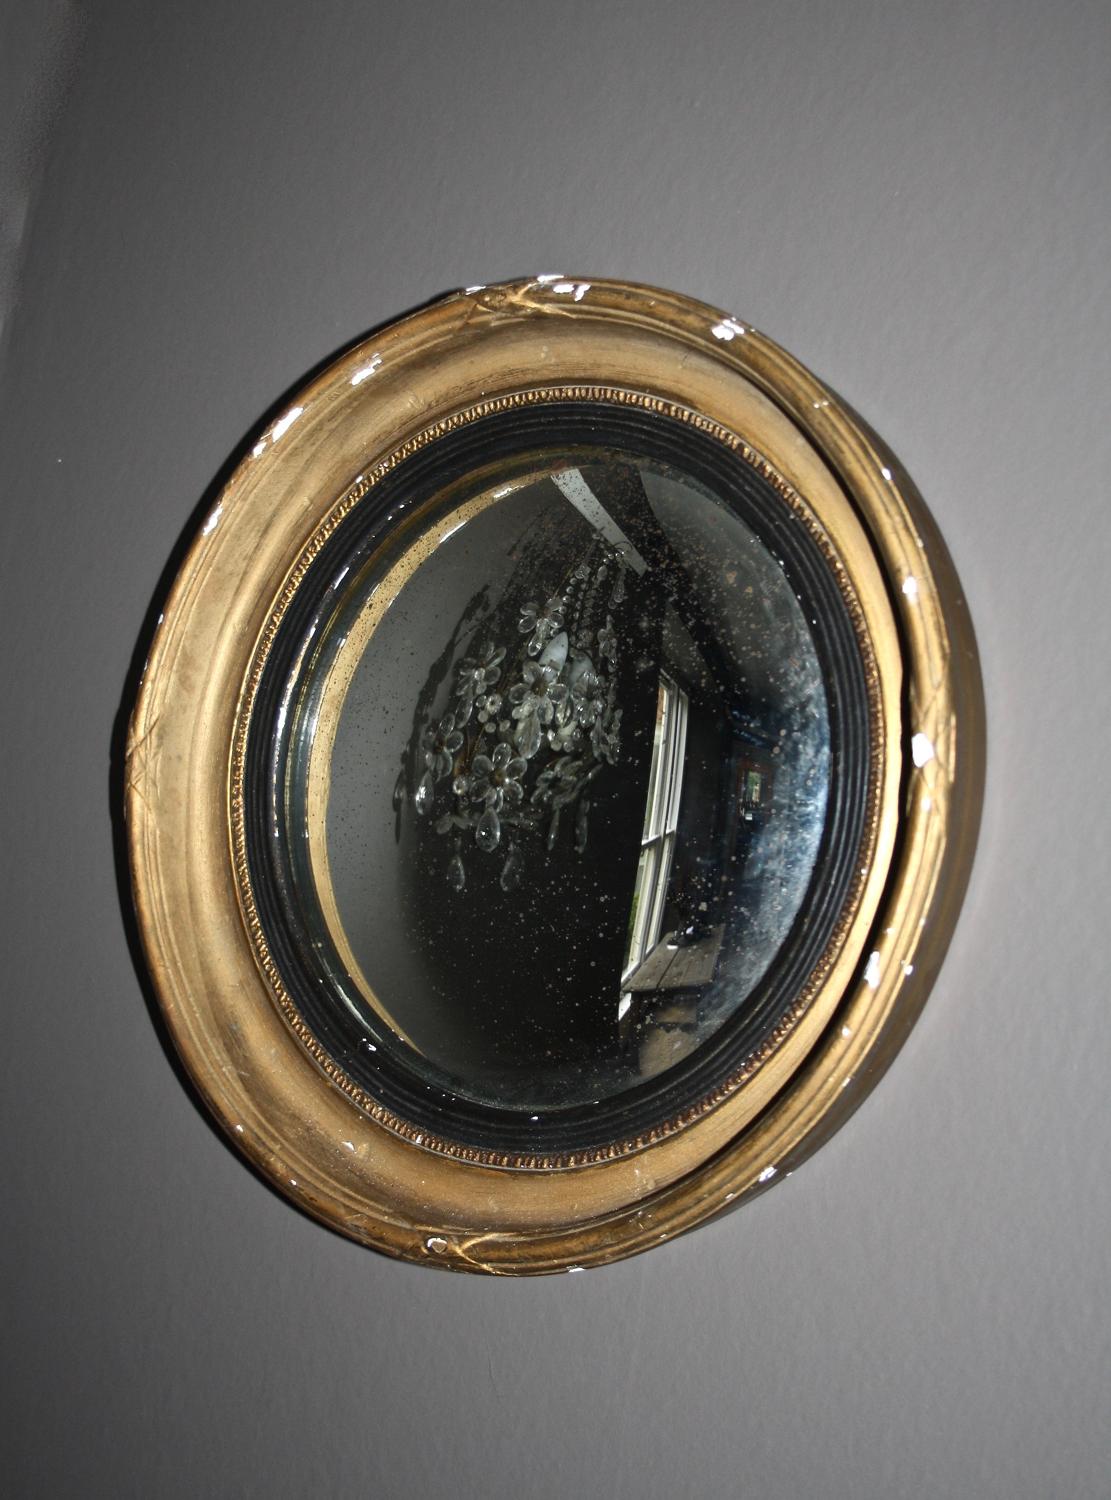 20th century gilt framed convex mirror